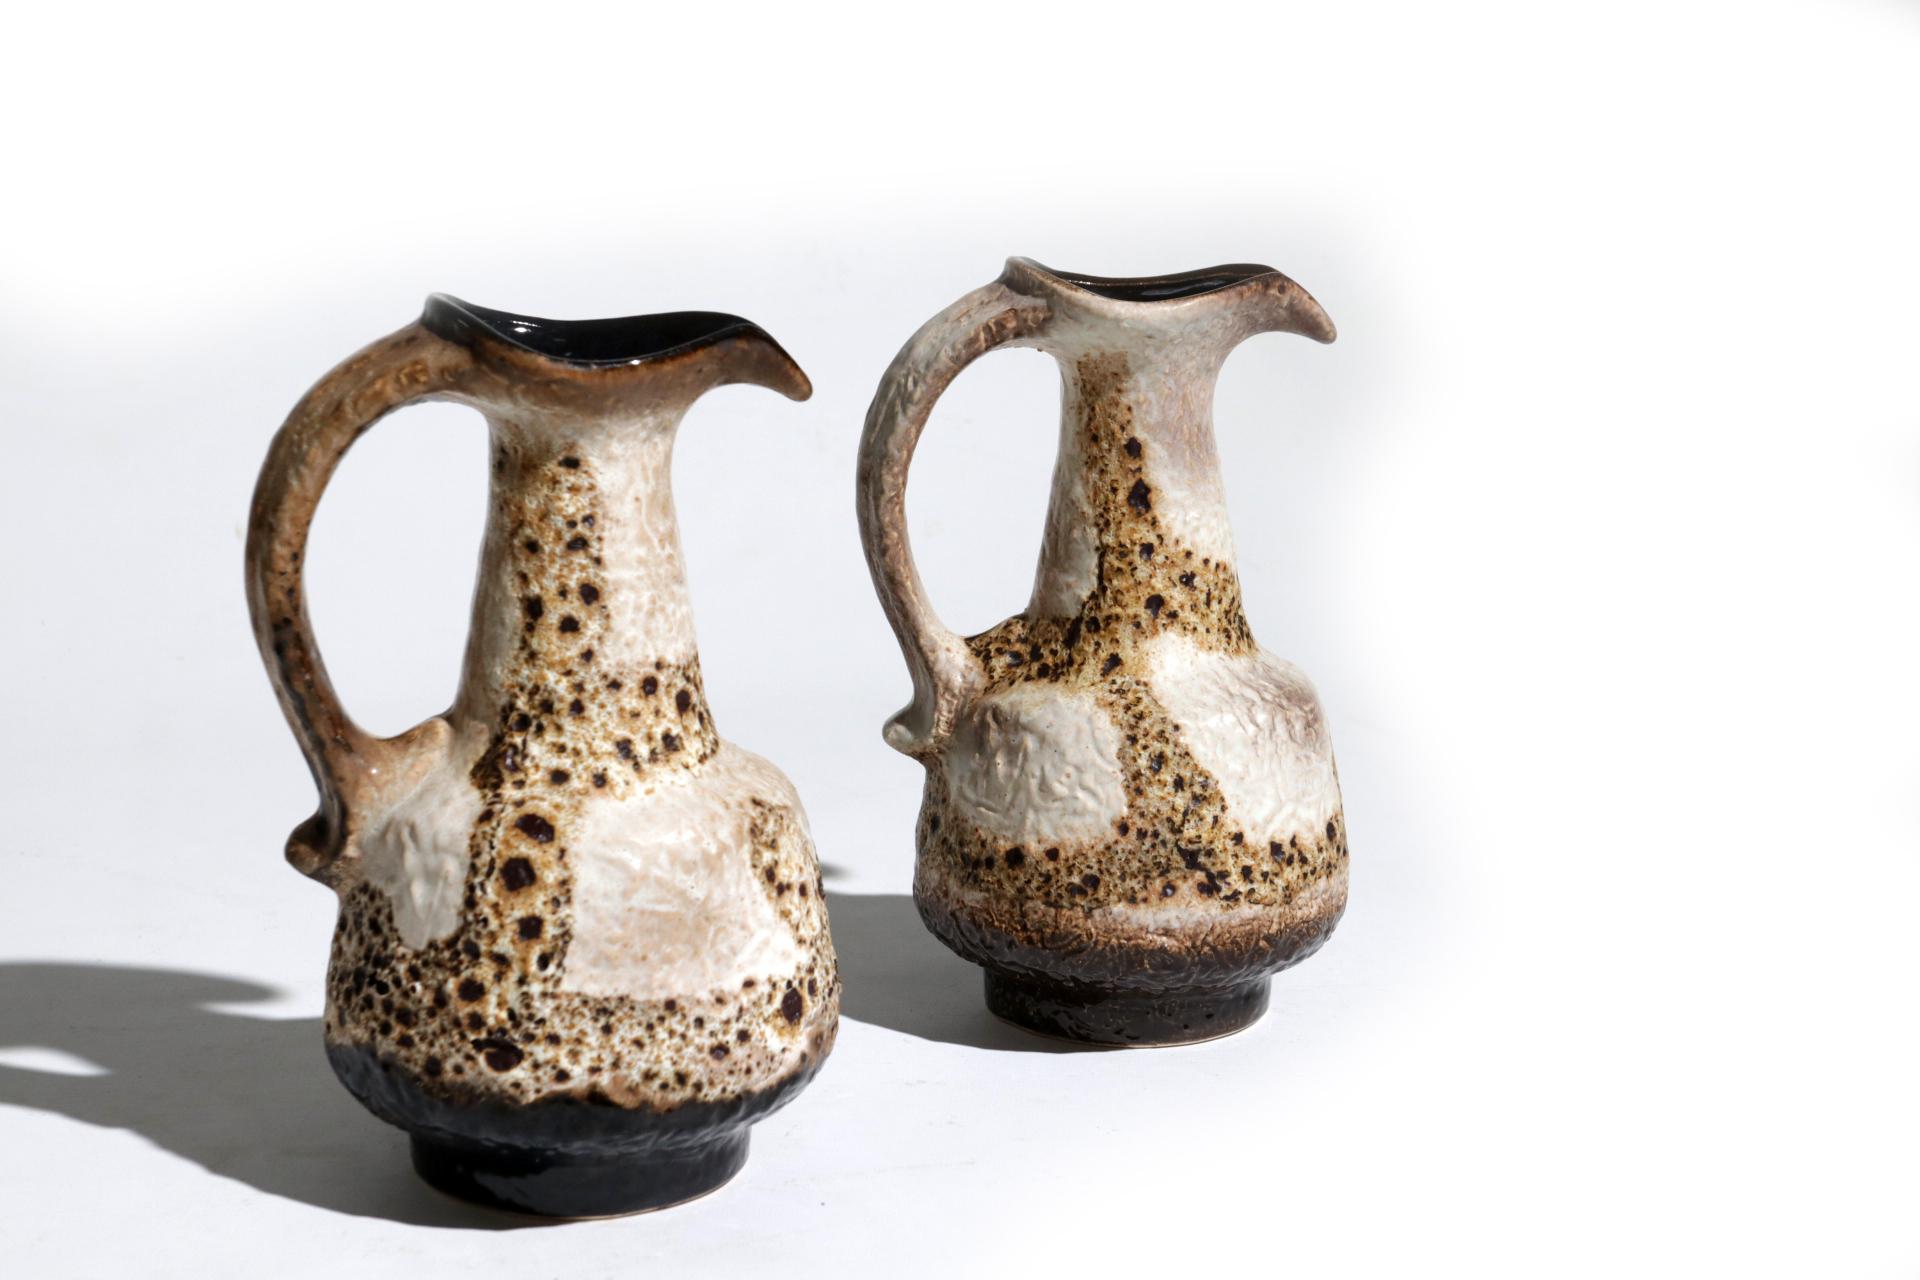 dümler and breiden pottery history